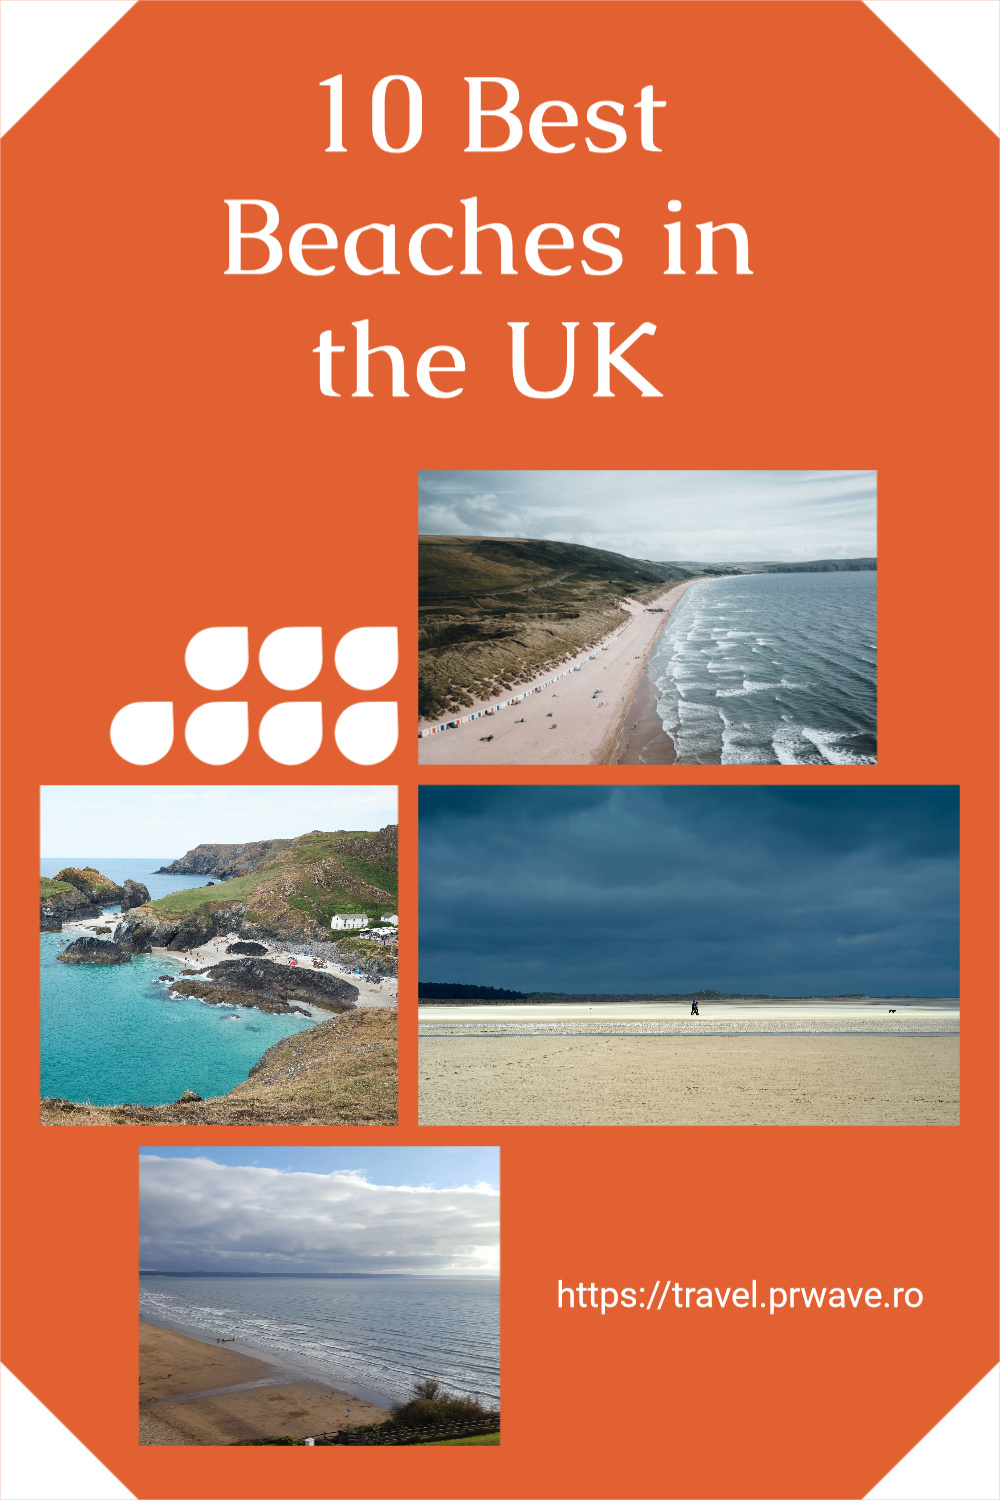 Top beaches in the UK! Here are the 10 best beaches in the UK worthy to visit. #uk #ukbeaches #ukbeach #beach #summer #sand #europetravel #beachdestination #uktravel